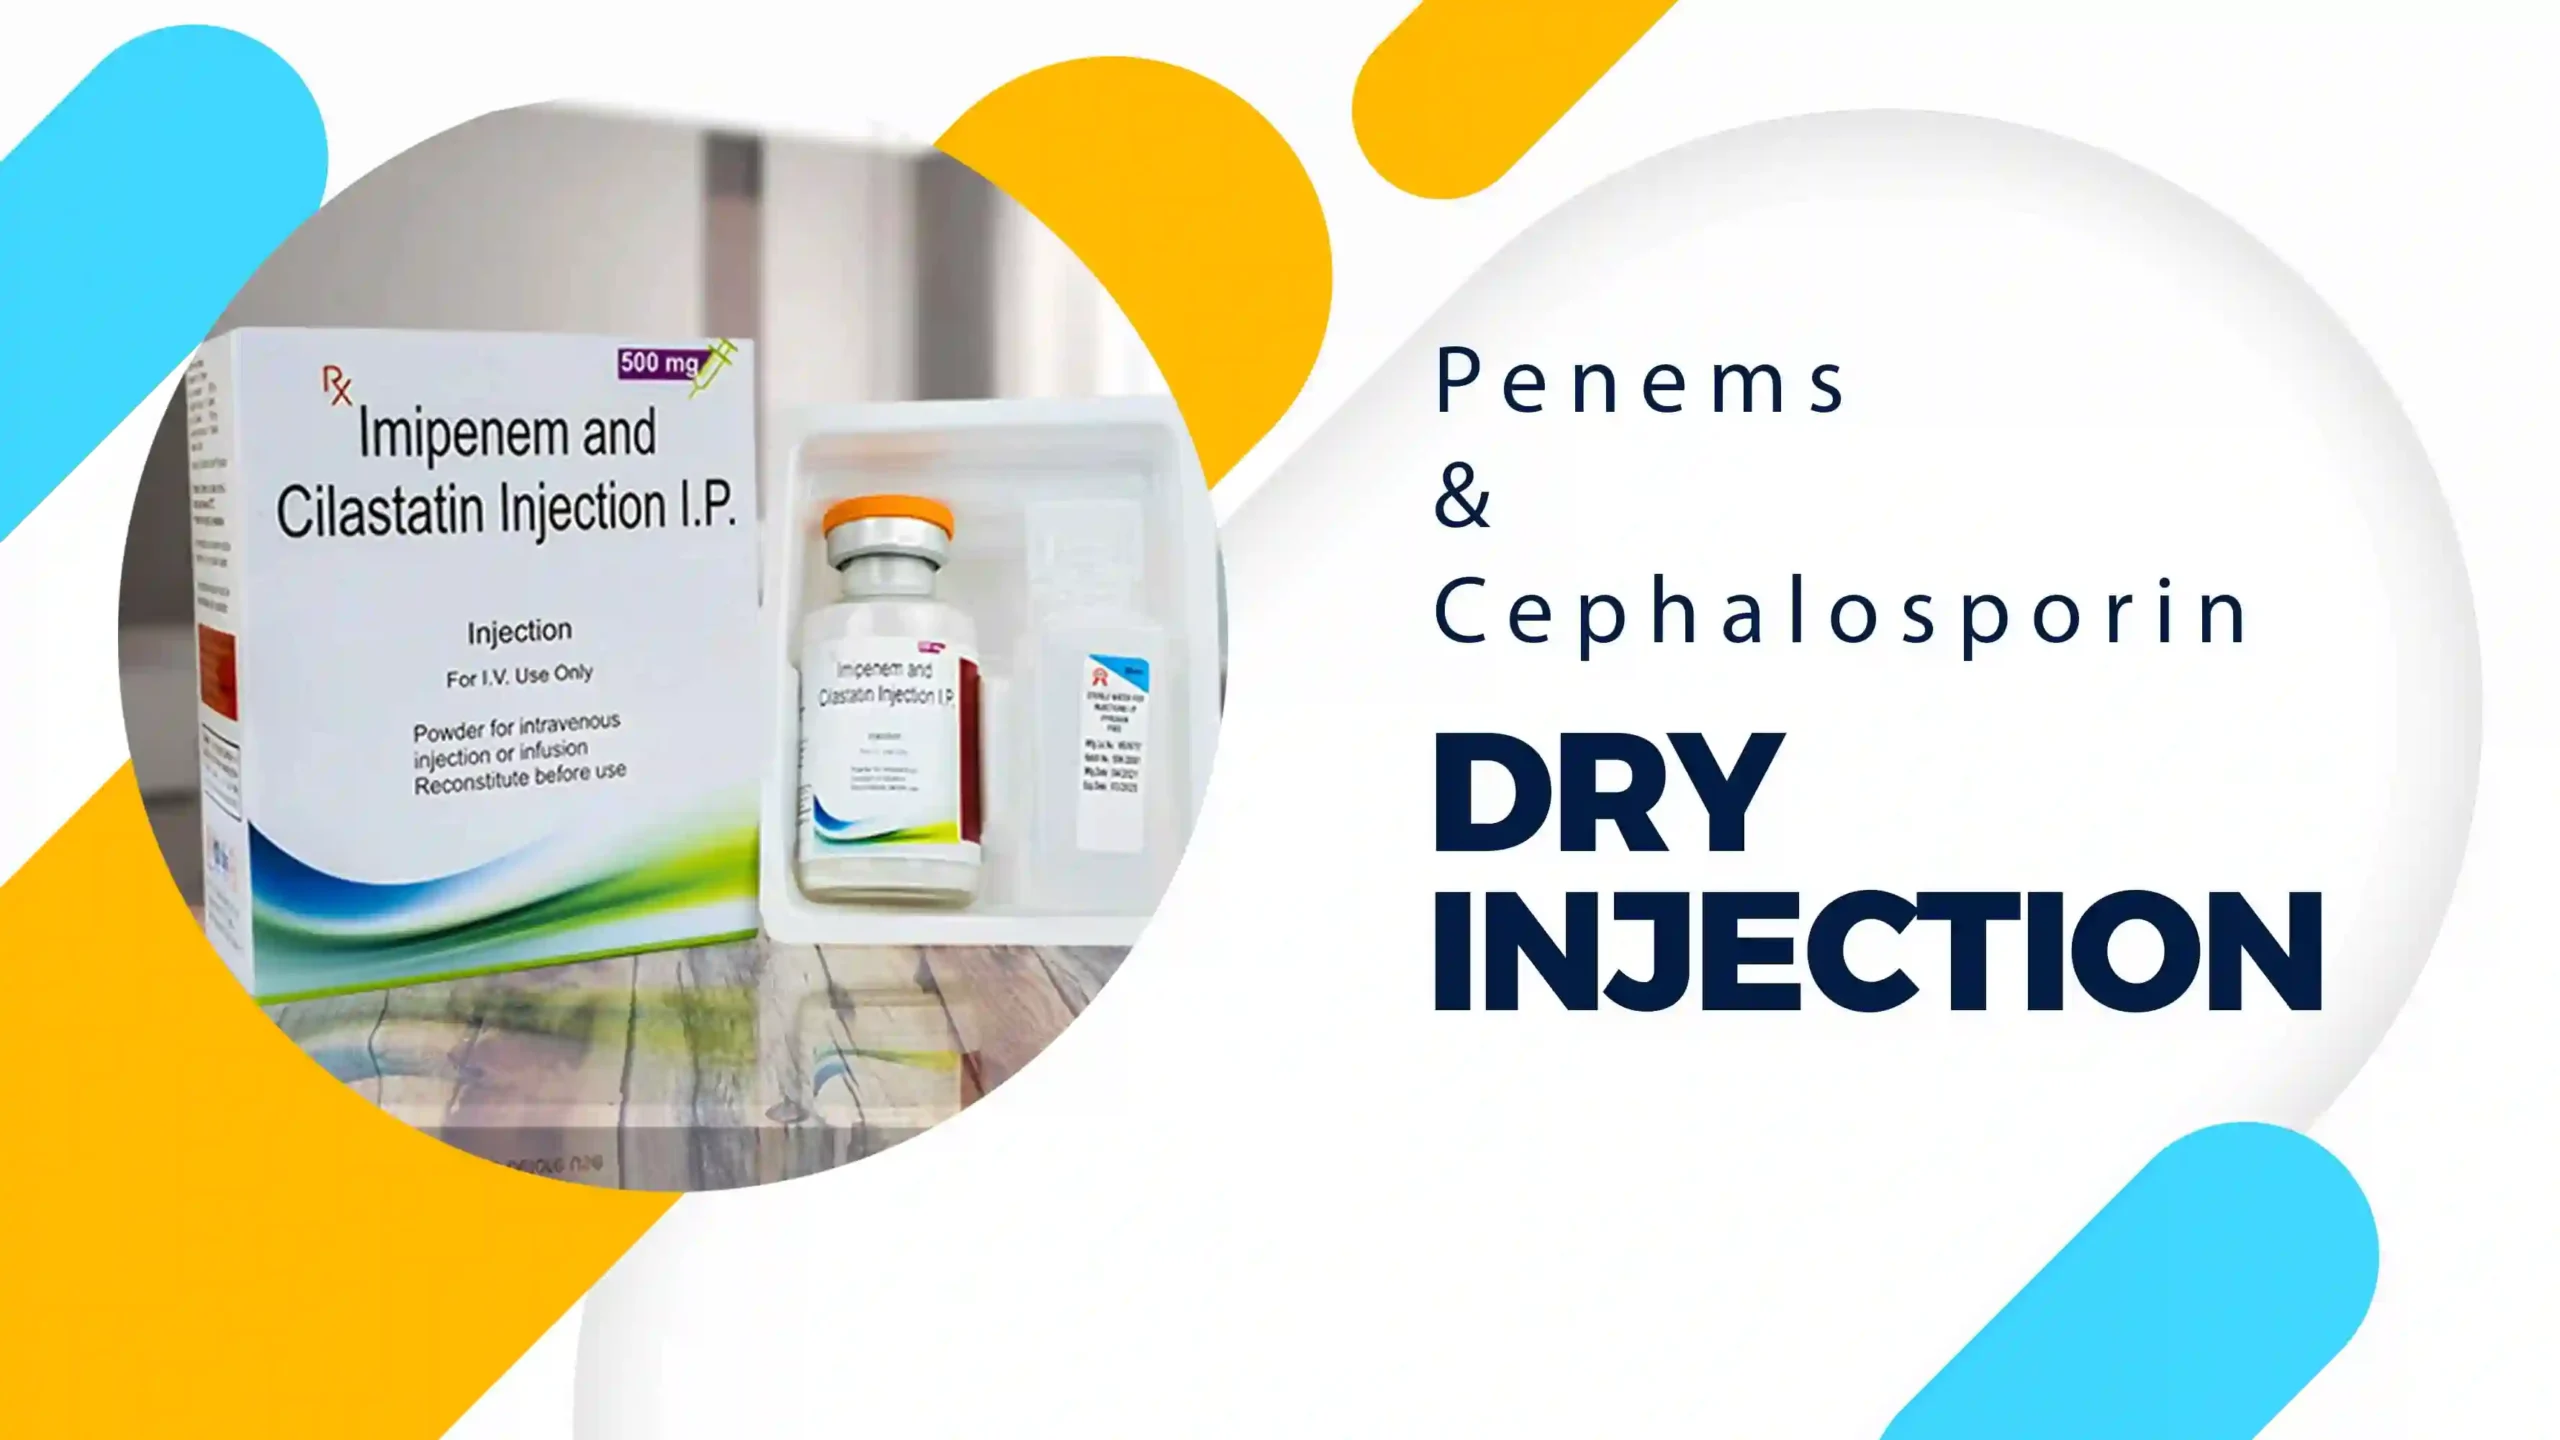 Penems & Cephalosporin Dry Injection